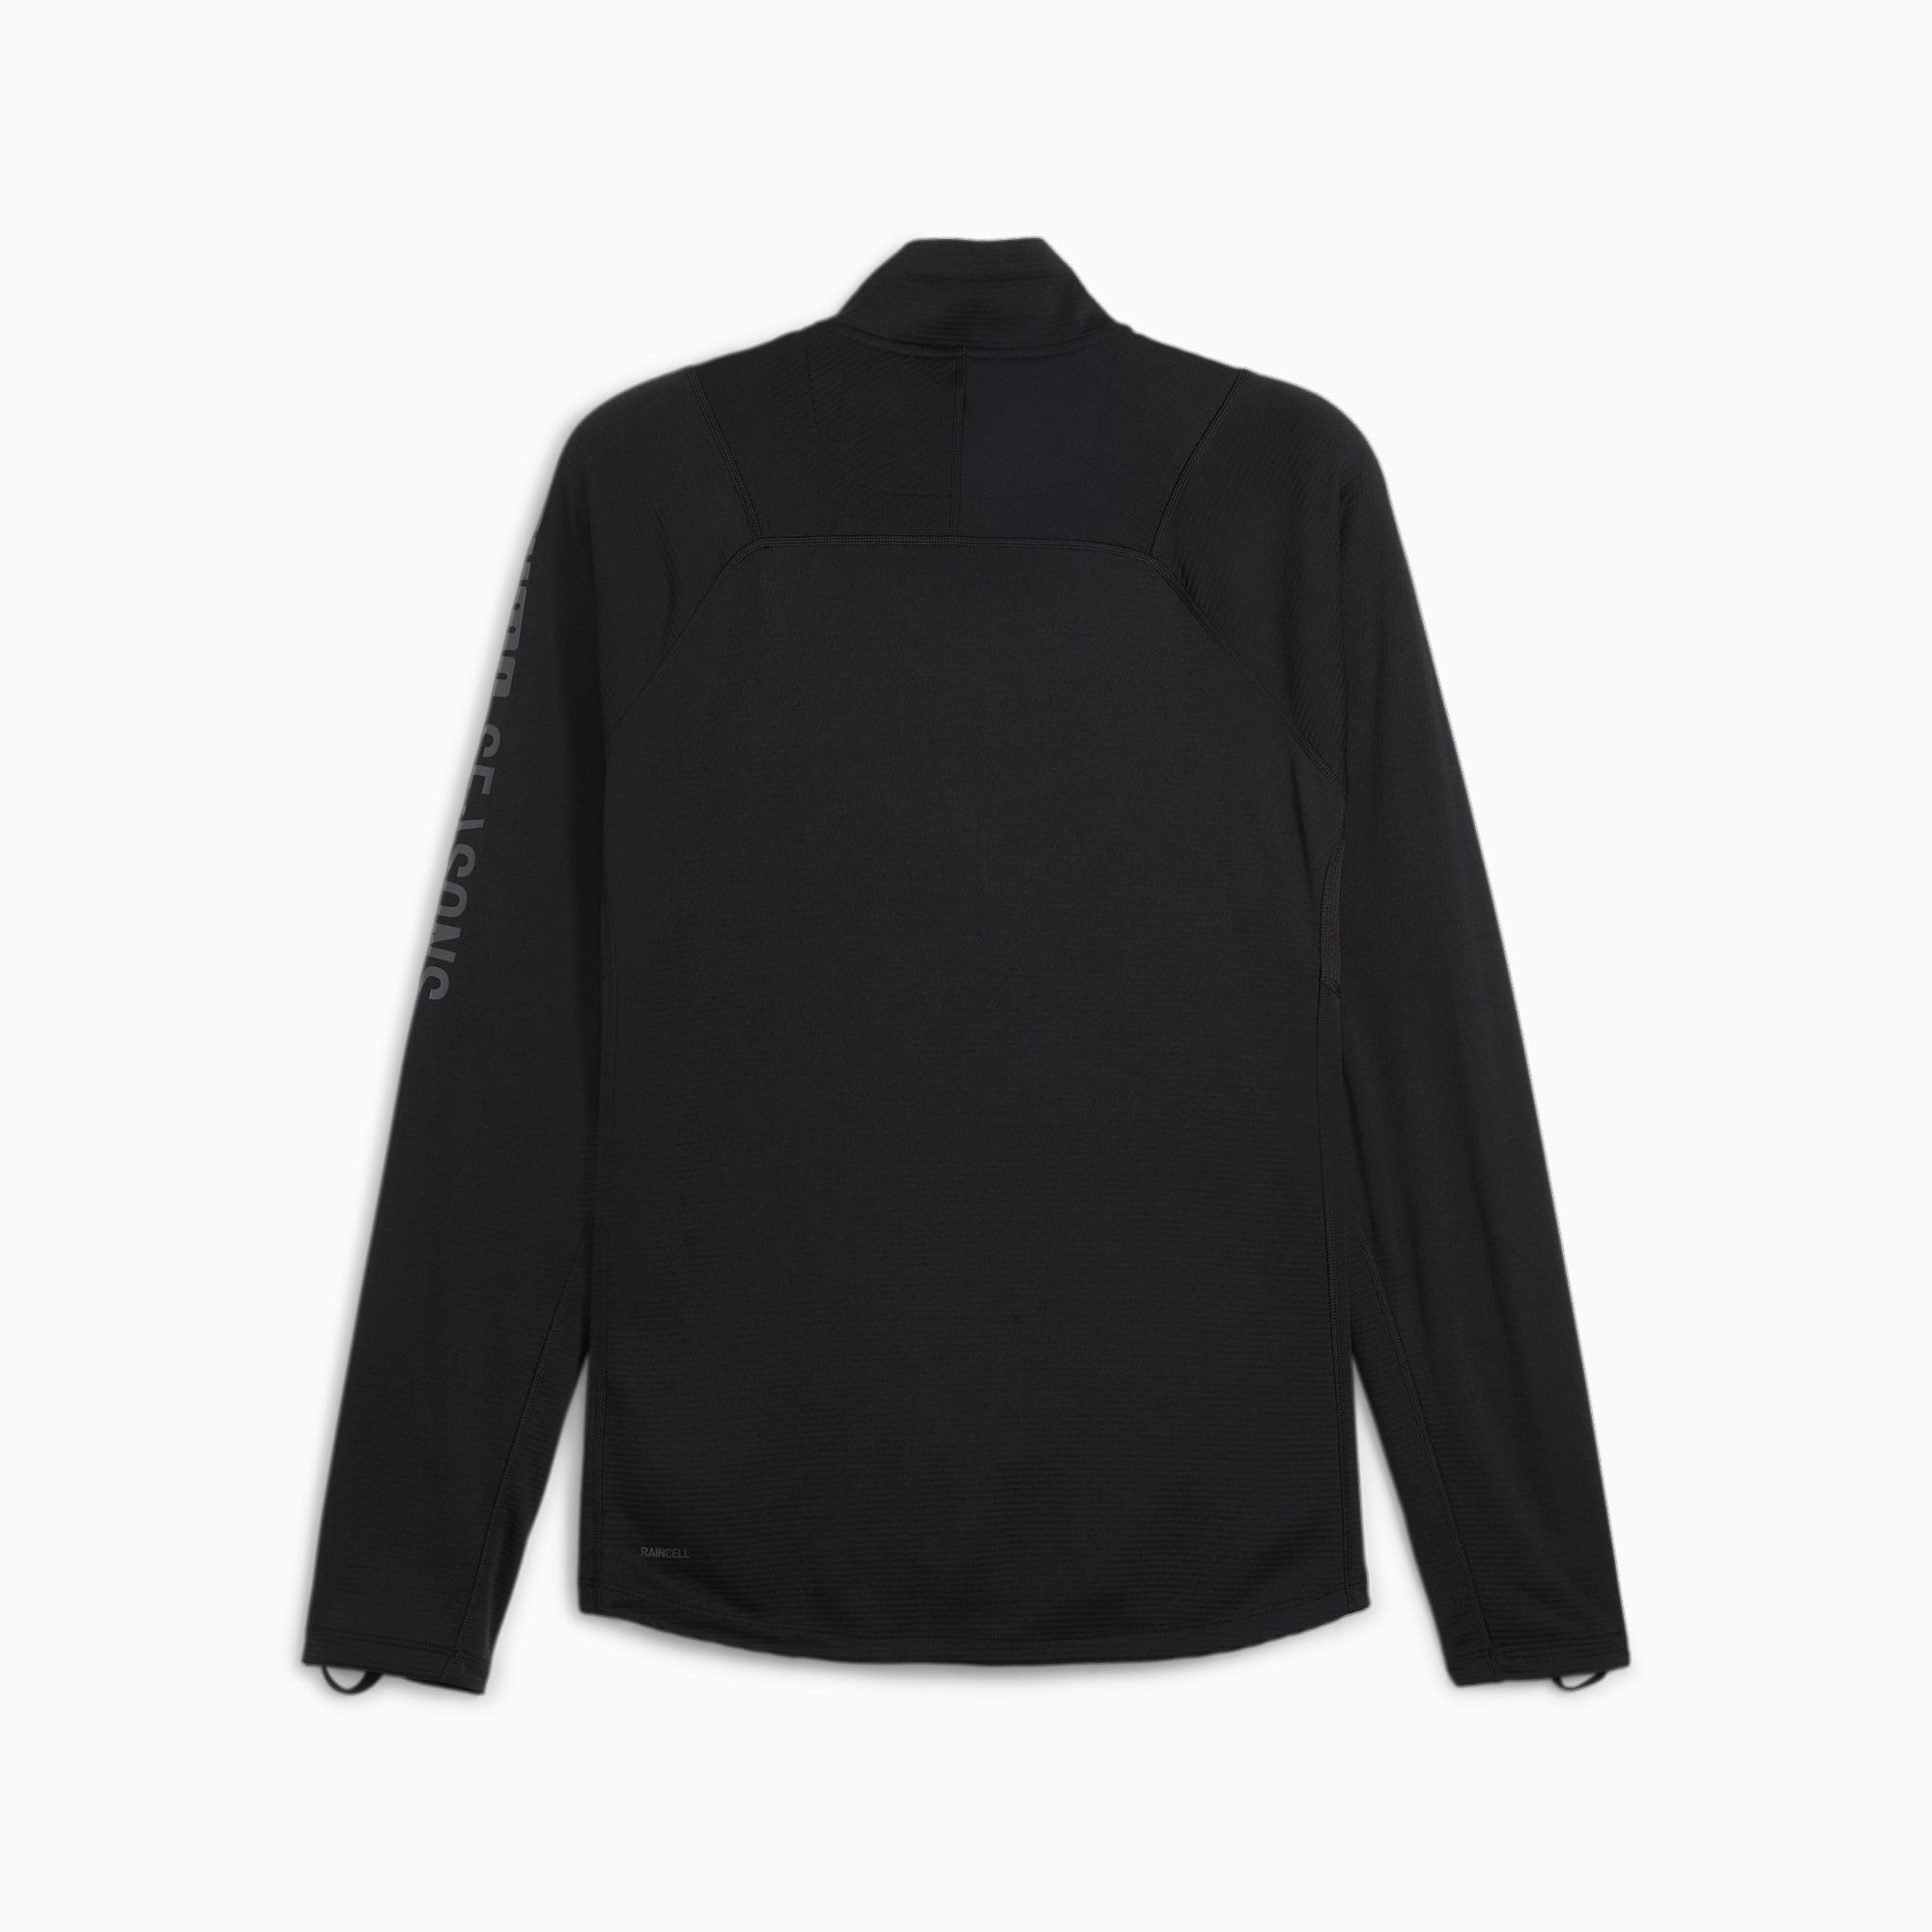 PUMA Seasons Long Sleeve Men's Running Shirt, Black, Size XS, Clothing